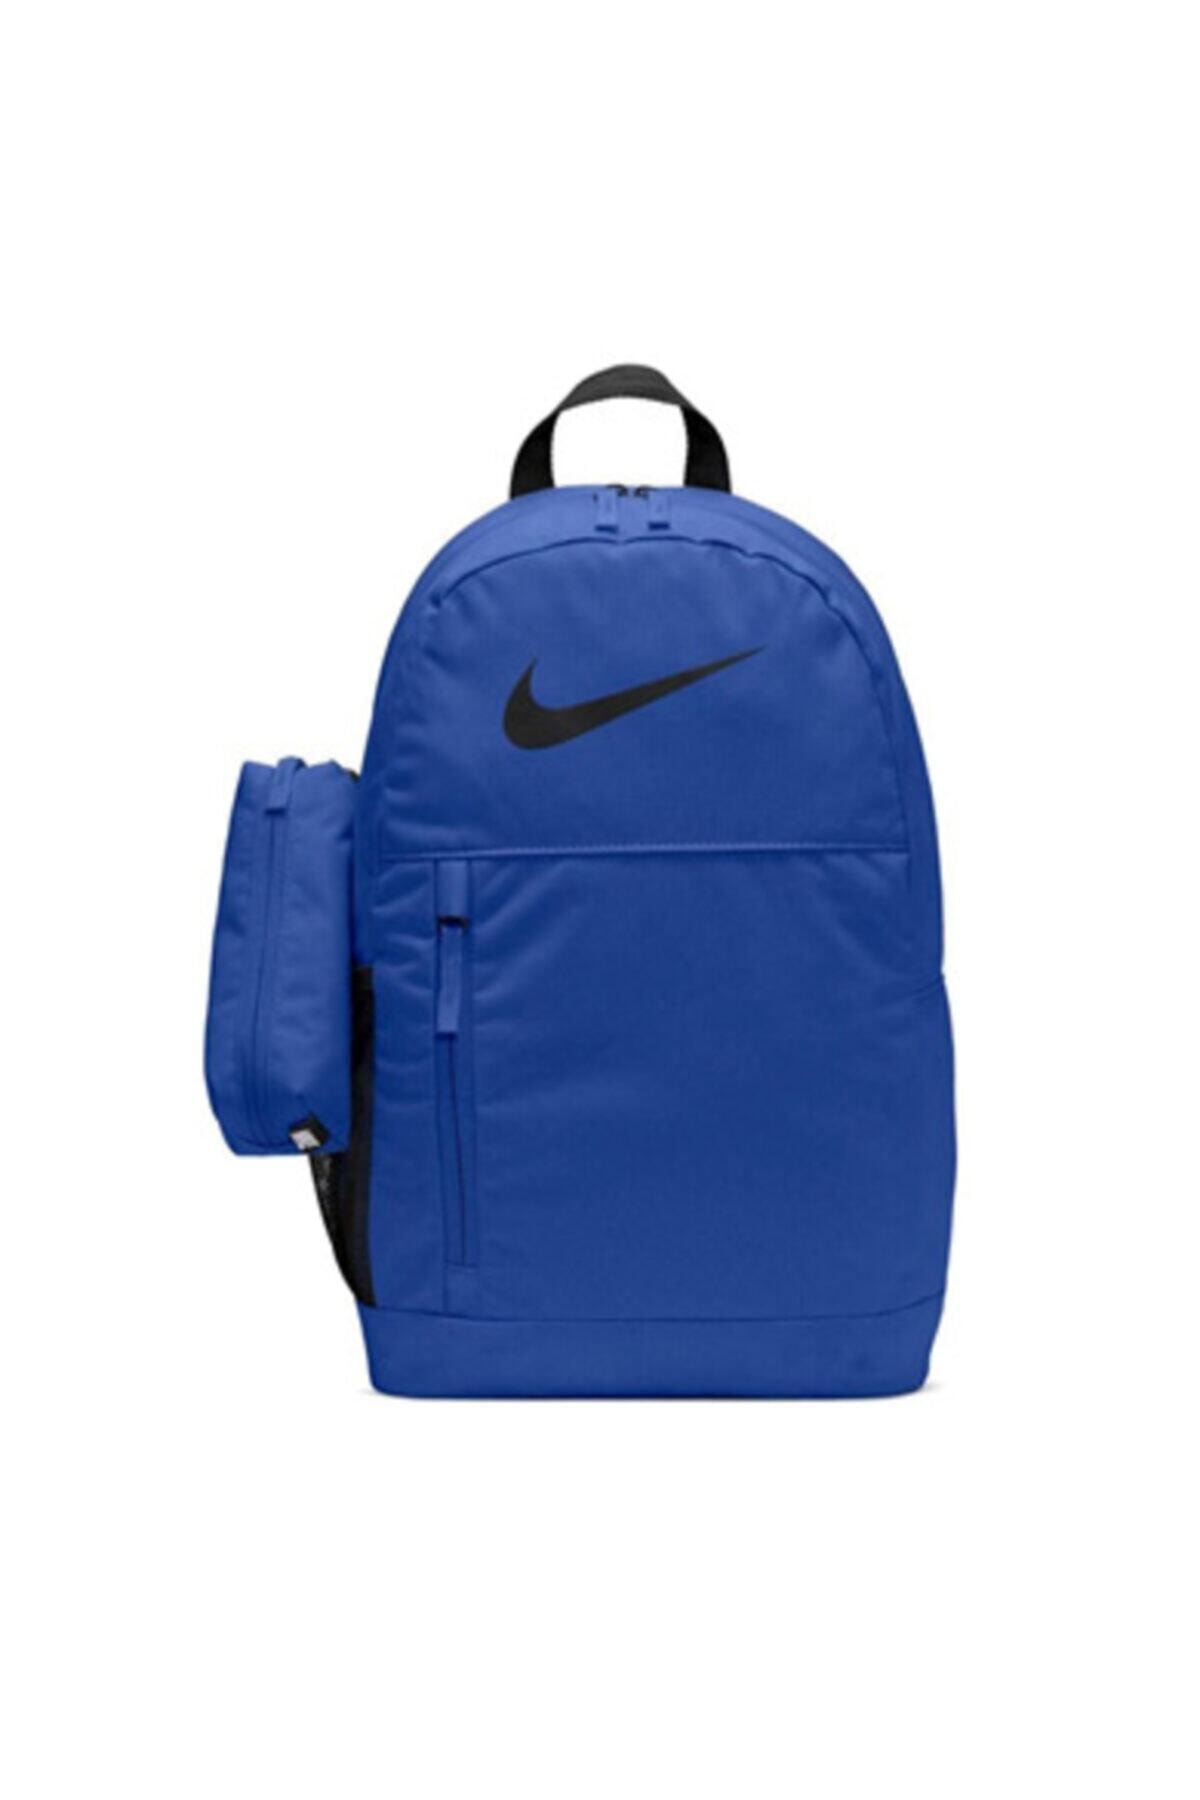 کیف کوله پشتی آبی تیره نایک Nike